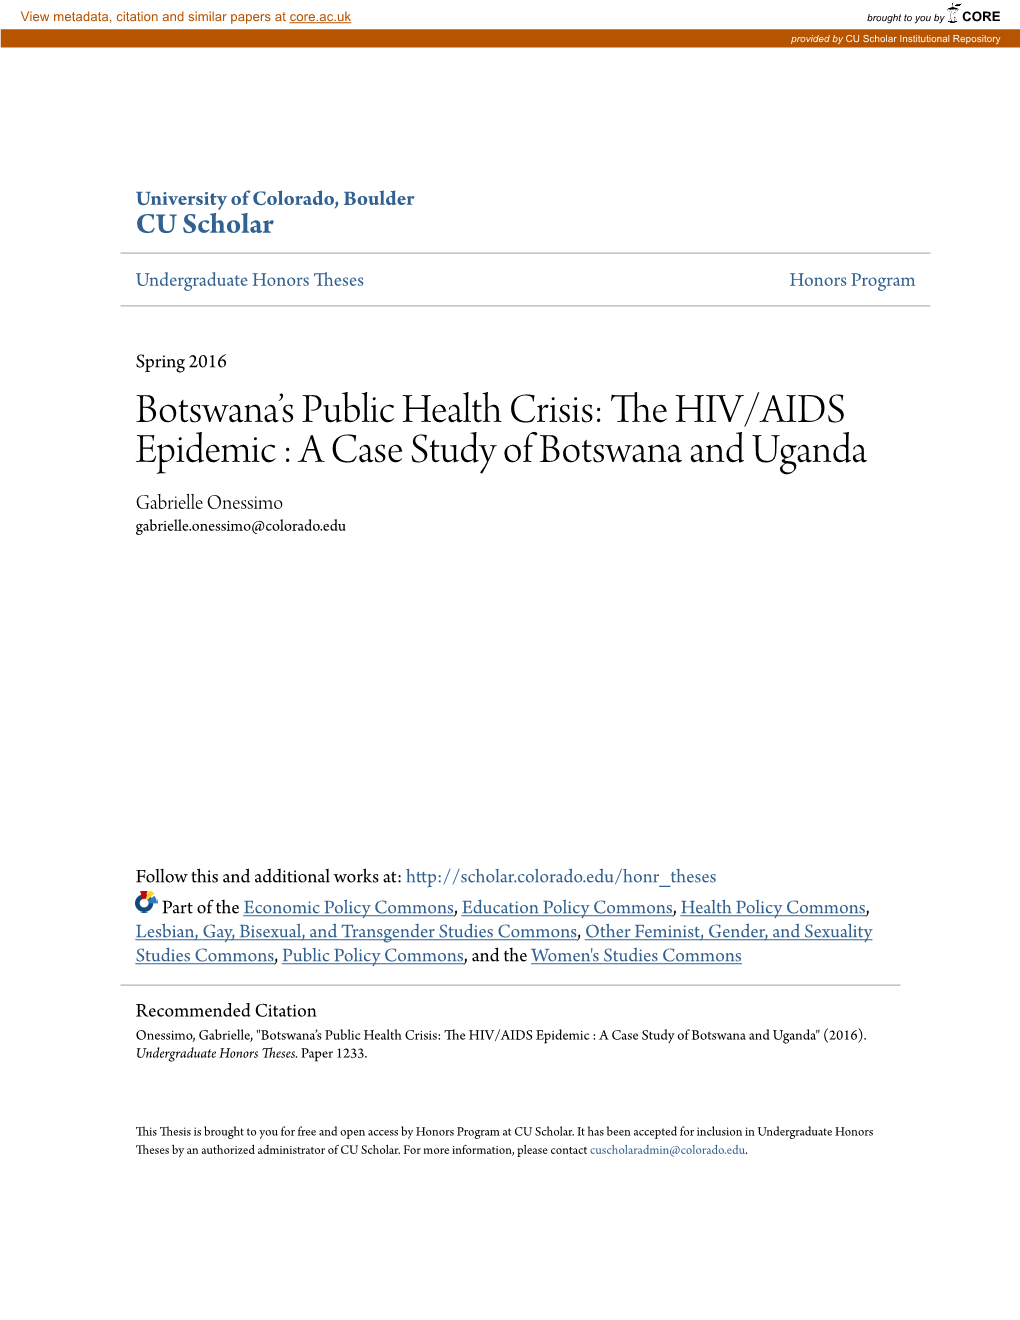 Botswana's Public Health Crisis: the HIV/AIDS Epidemic